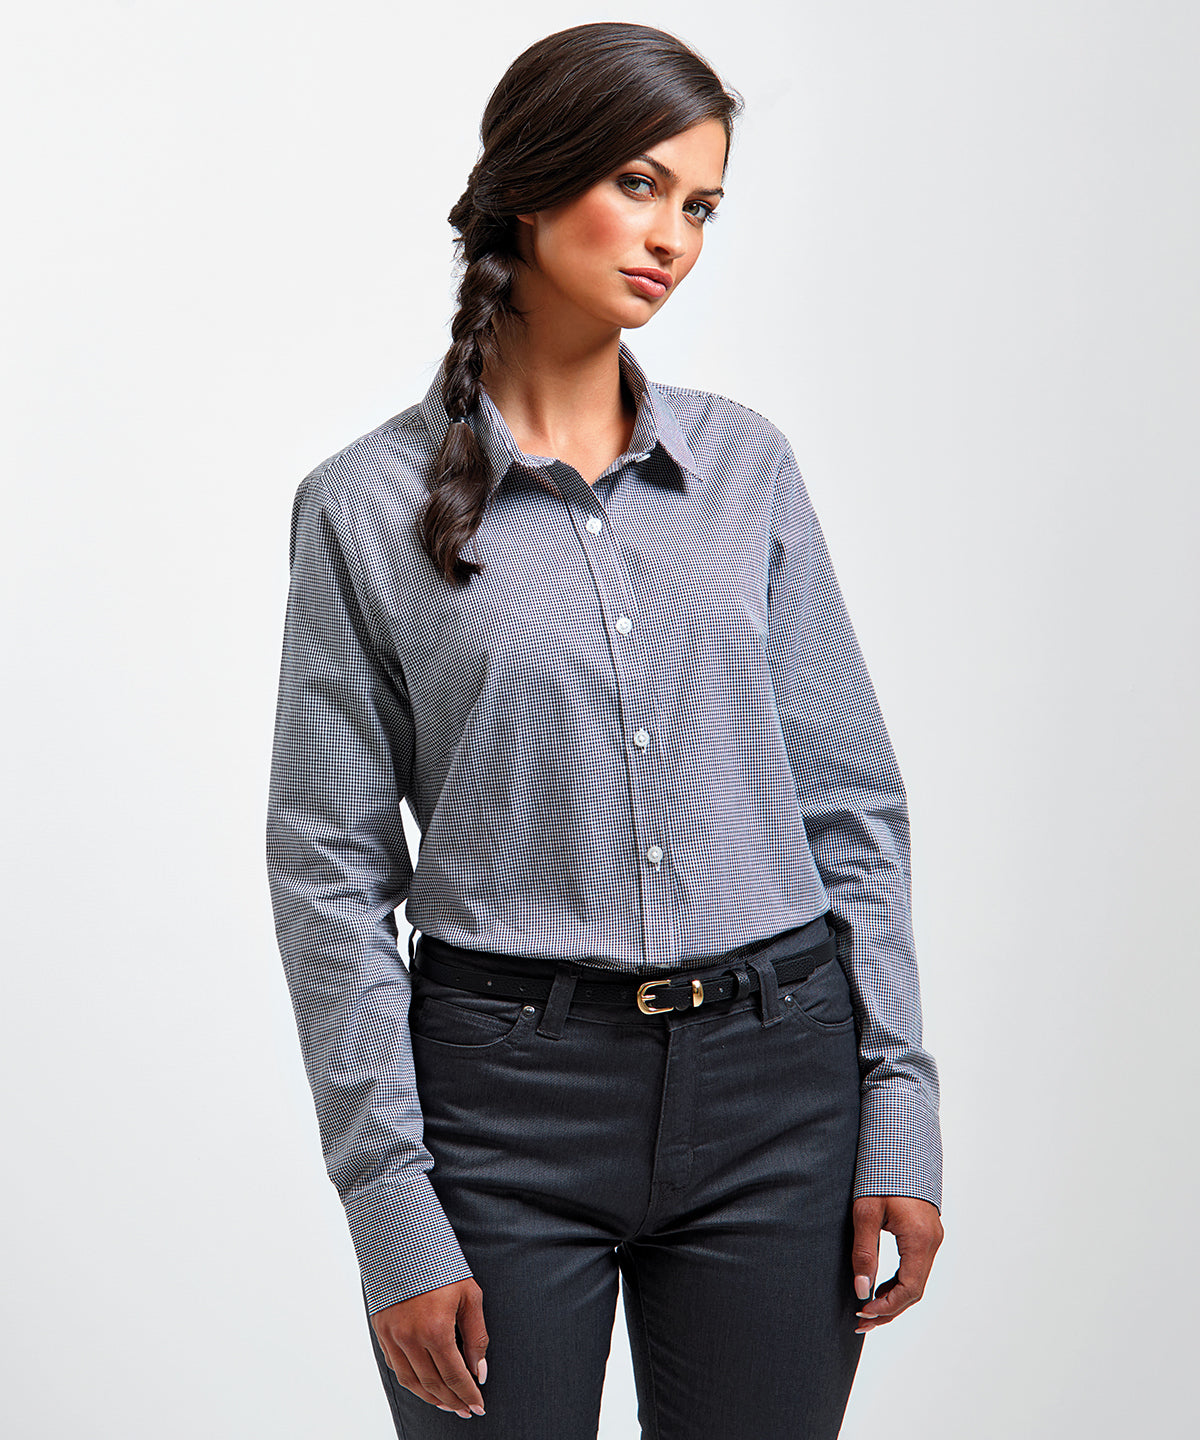 Bolir - Women's Microcheck (Gingham) Long Sleeve Cotton Shirt